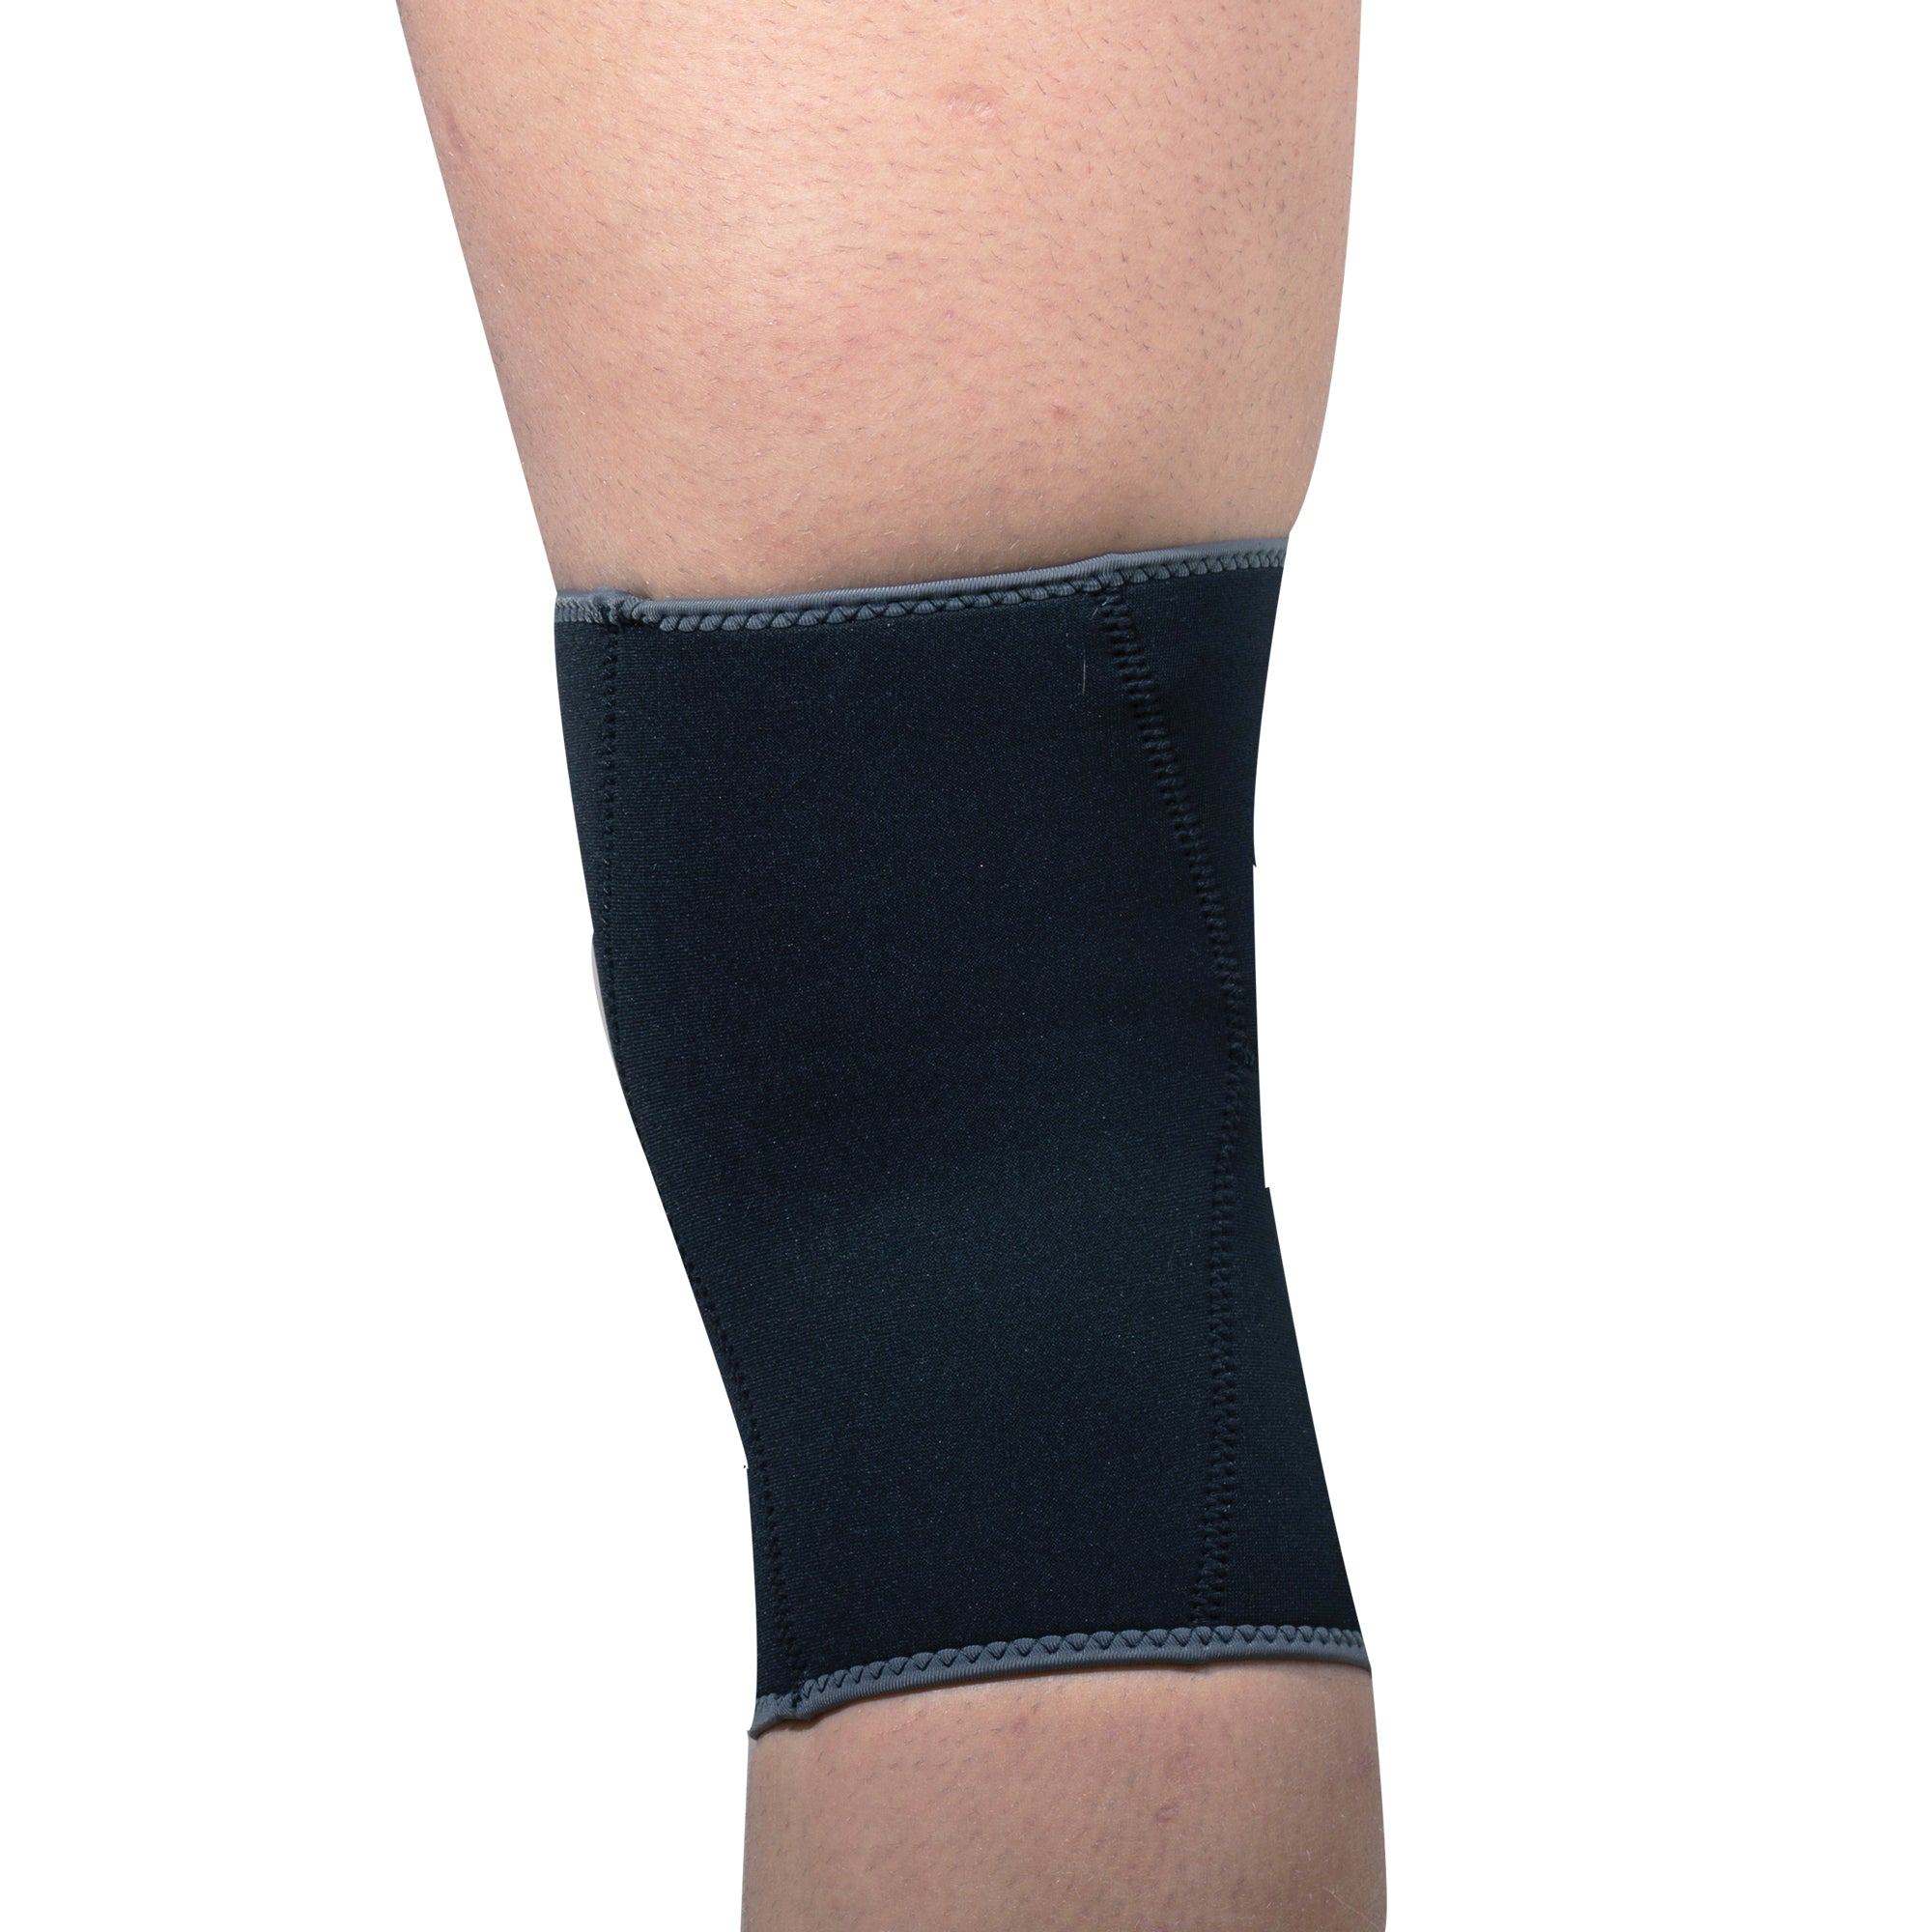 Neoprene Knee Support - Optimum